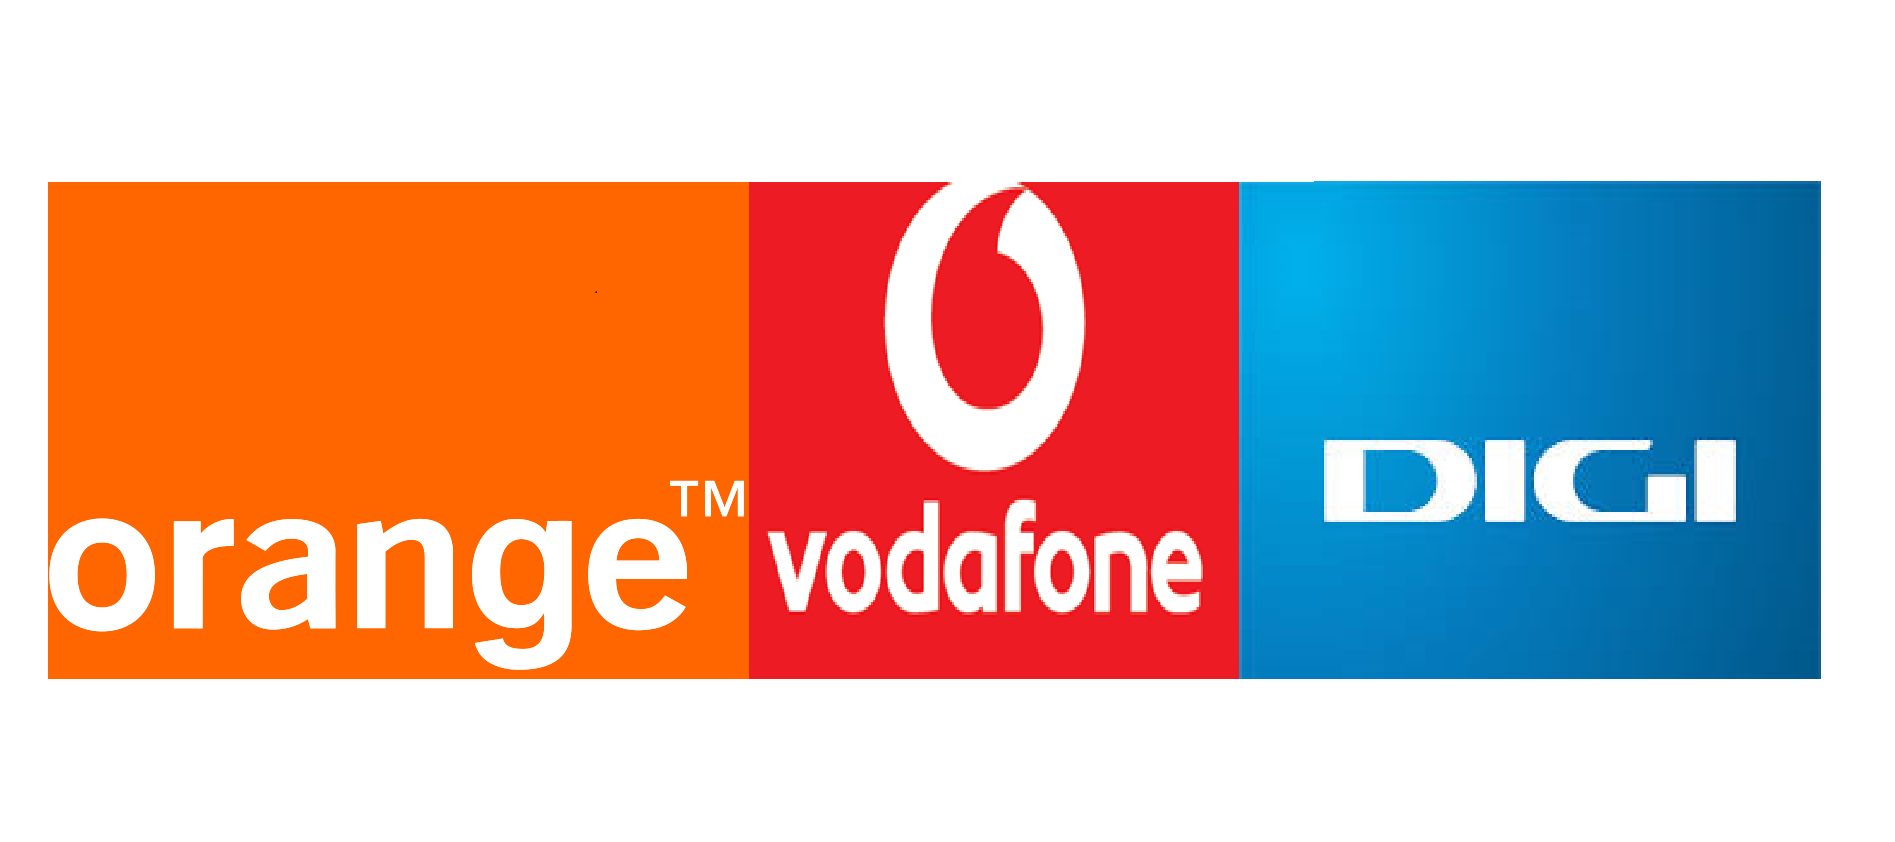 Orange Vodafone Digi